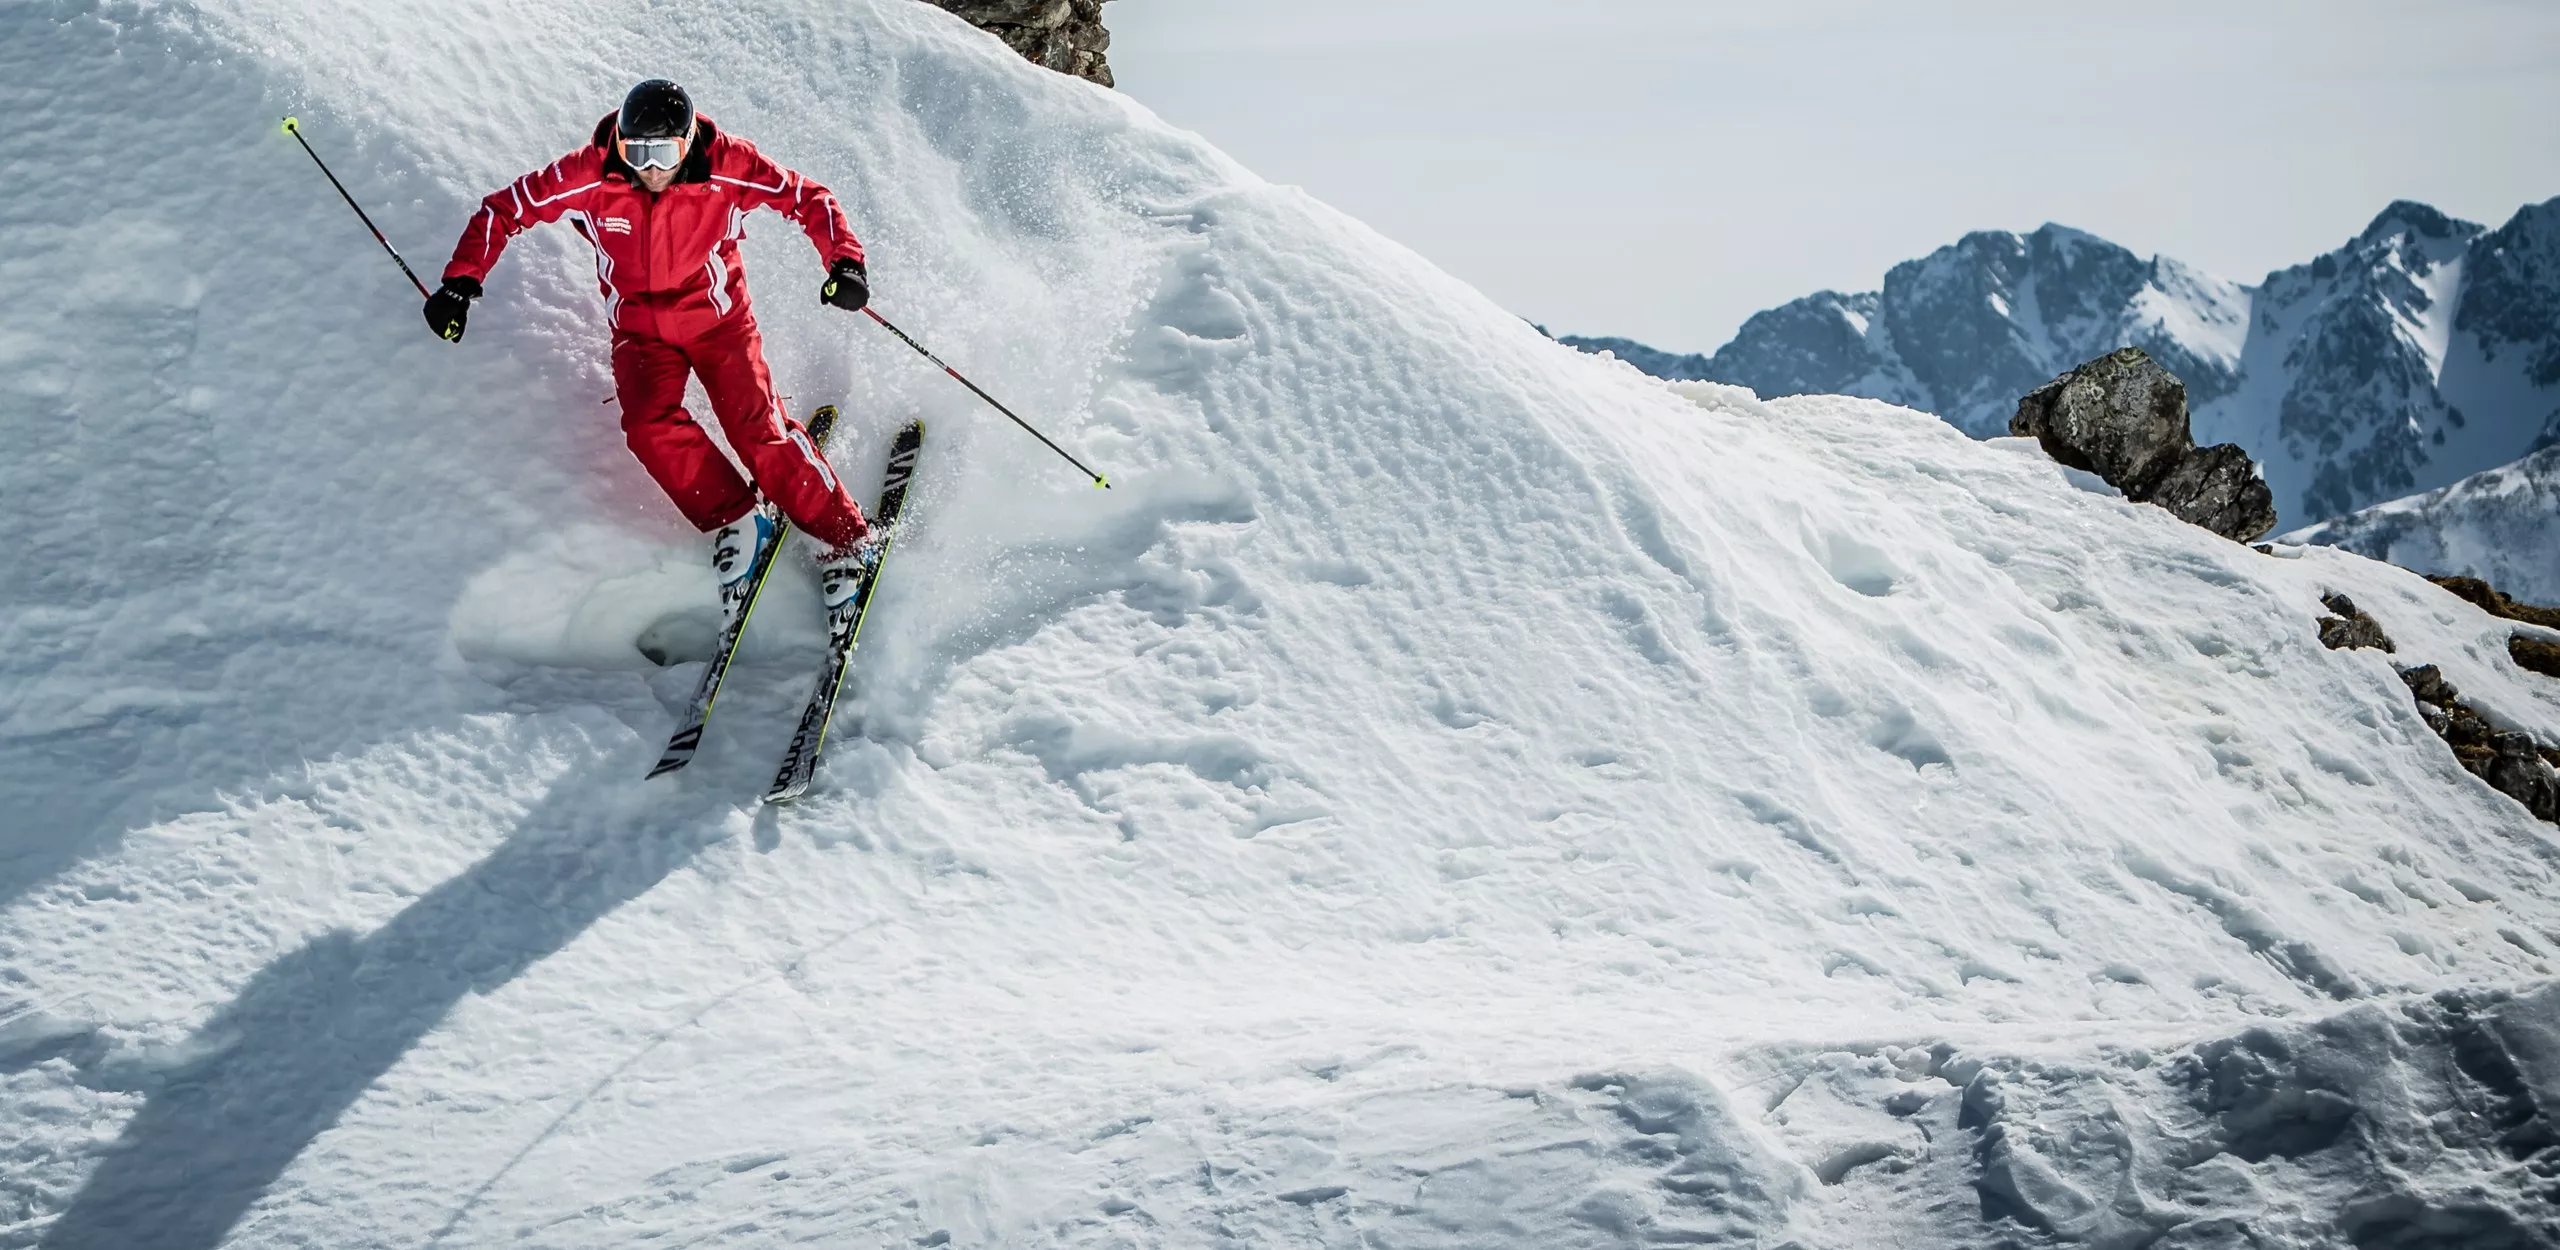 Asia in Albania, Europe | Snowboarding,Skiing - Rated 0.8